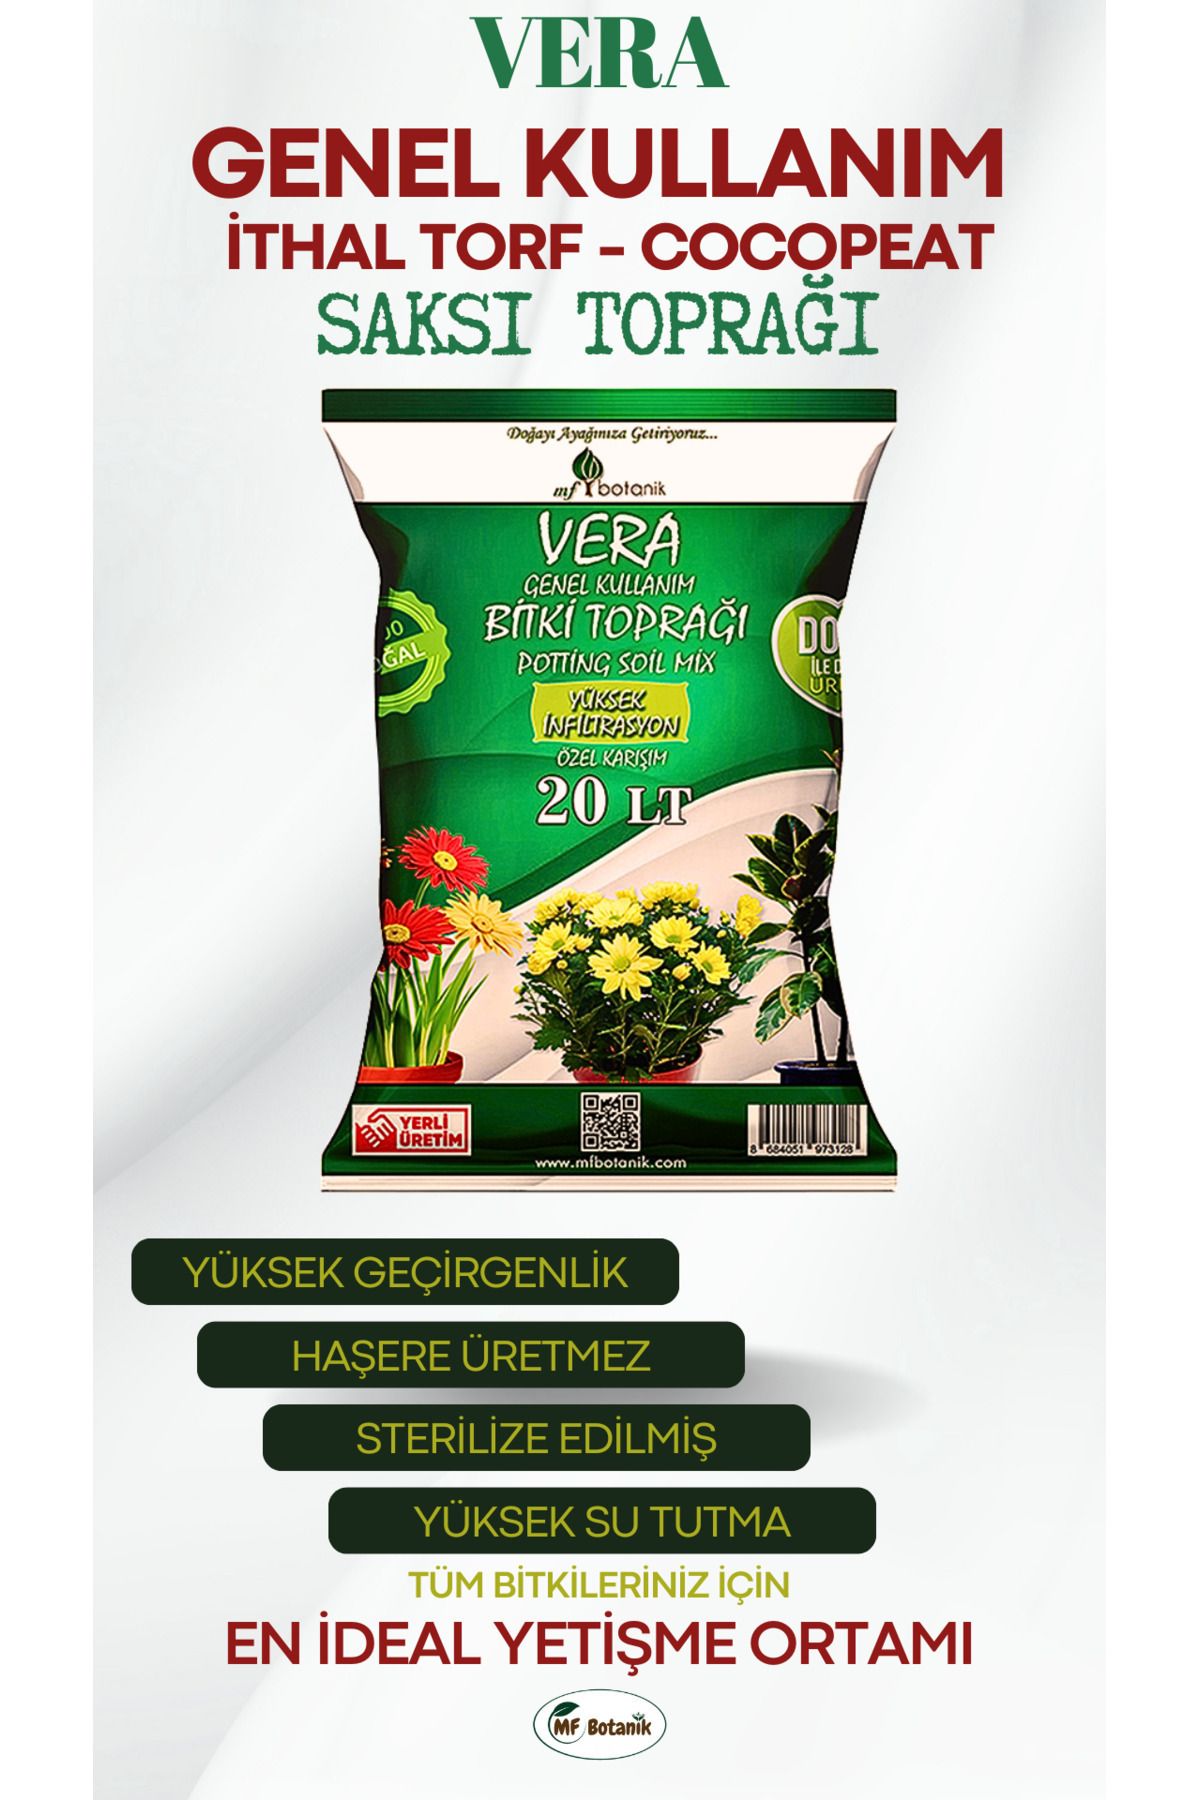 MF Botanik Vera Ithal Torf Cocopeat Özel Karışım Saksı Harcı Bitki Toprağı 20 Litre